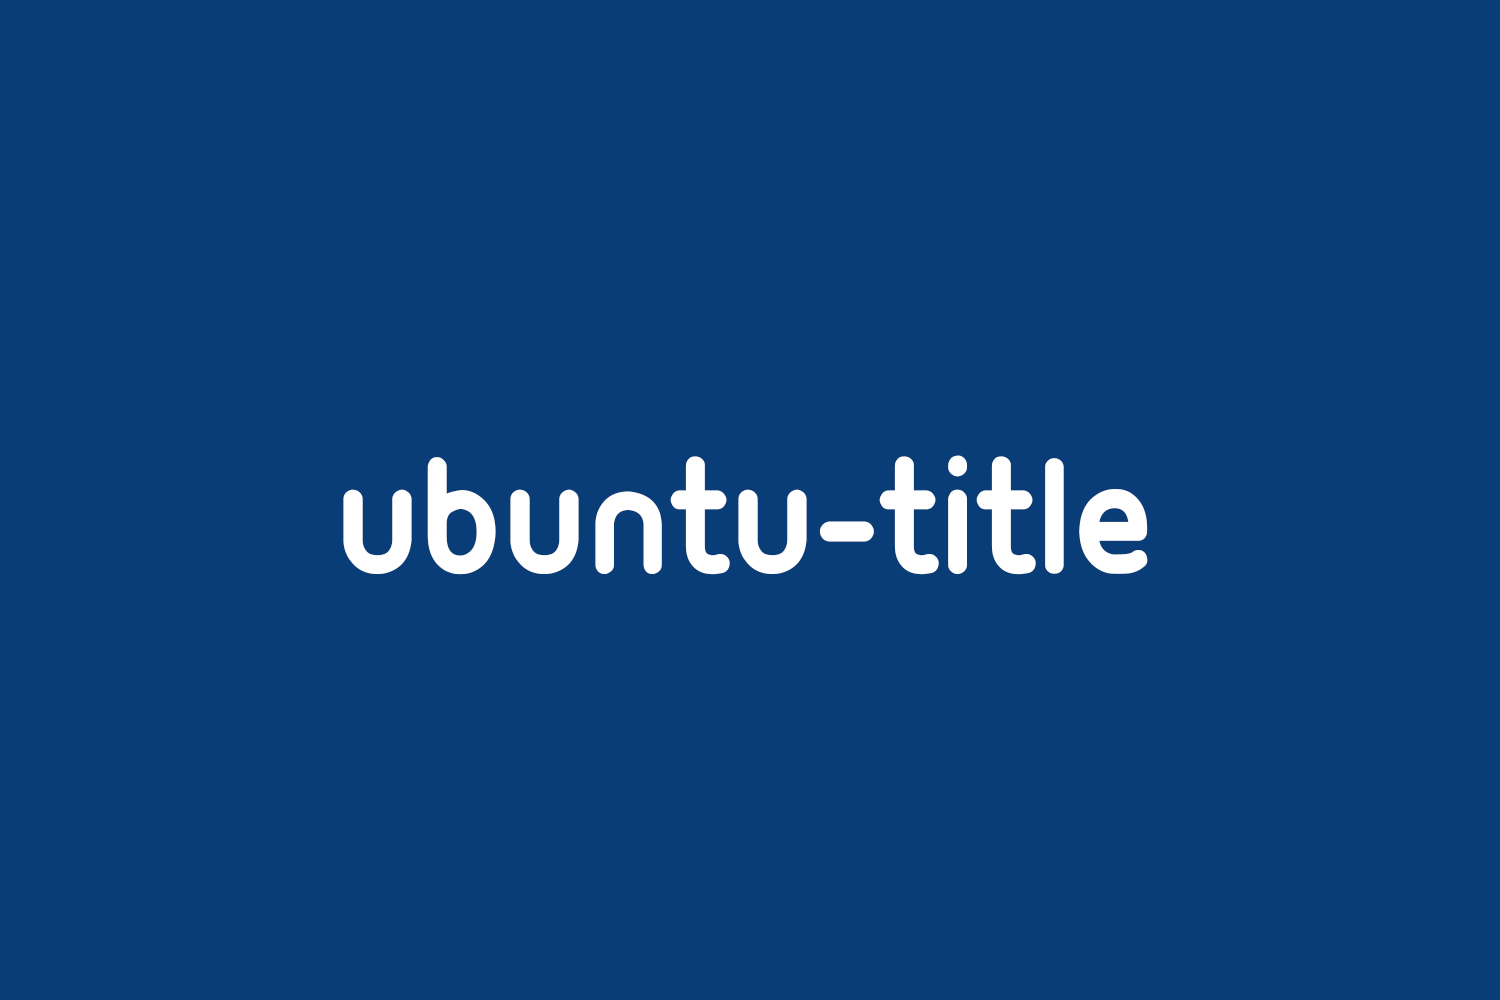 Ubuntu-Title